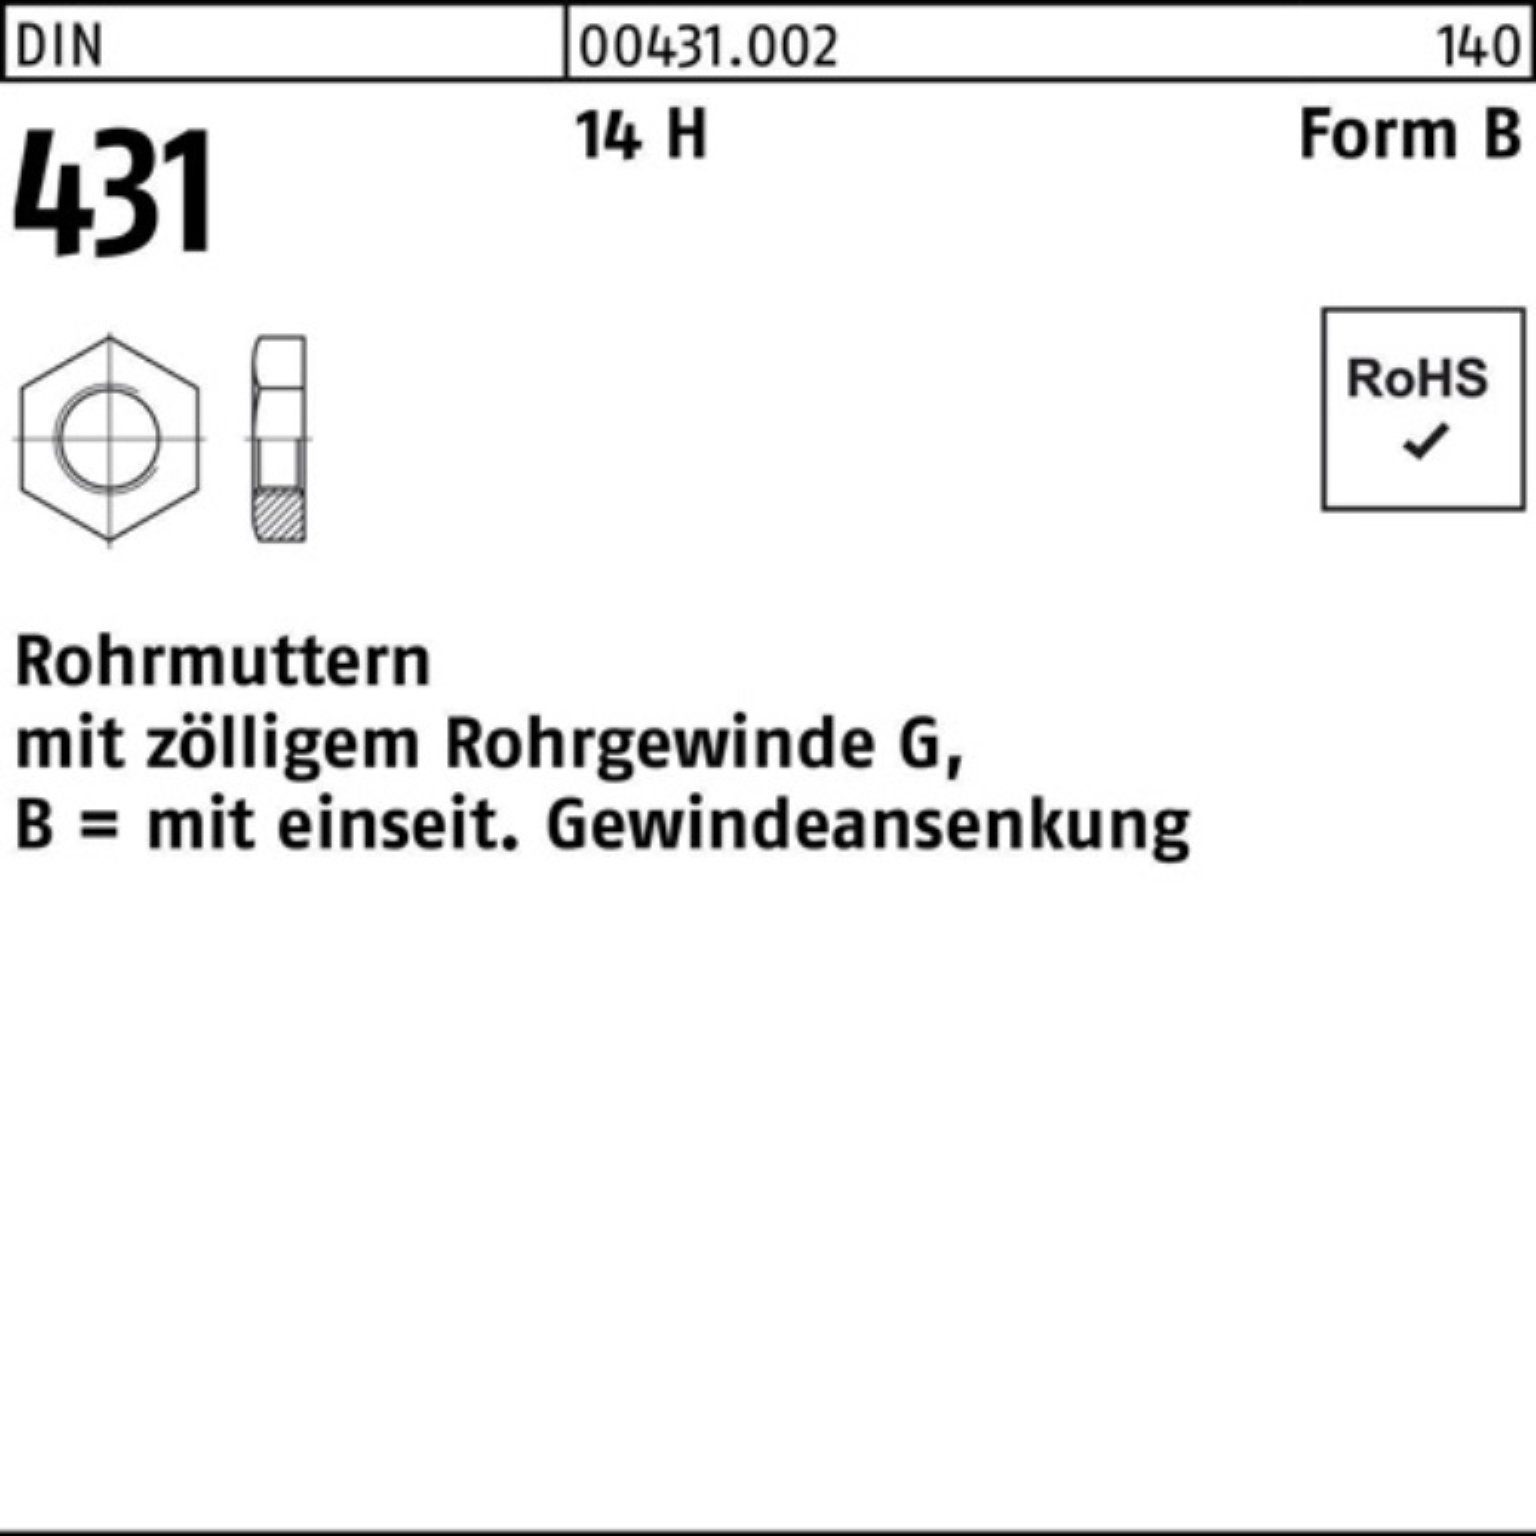 Reyher Rohrmutter 100er Pack Rohrmutter DIN 431 BG 1 1/2 14 H 1 Stück DIN 431 14 H Form